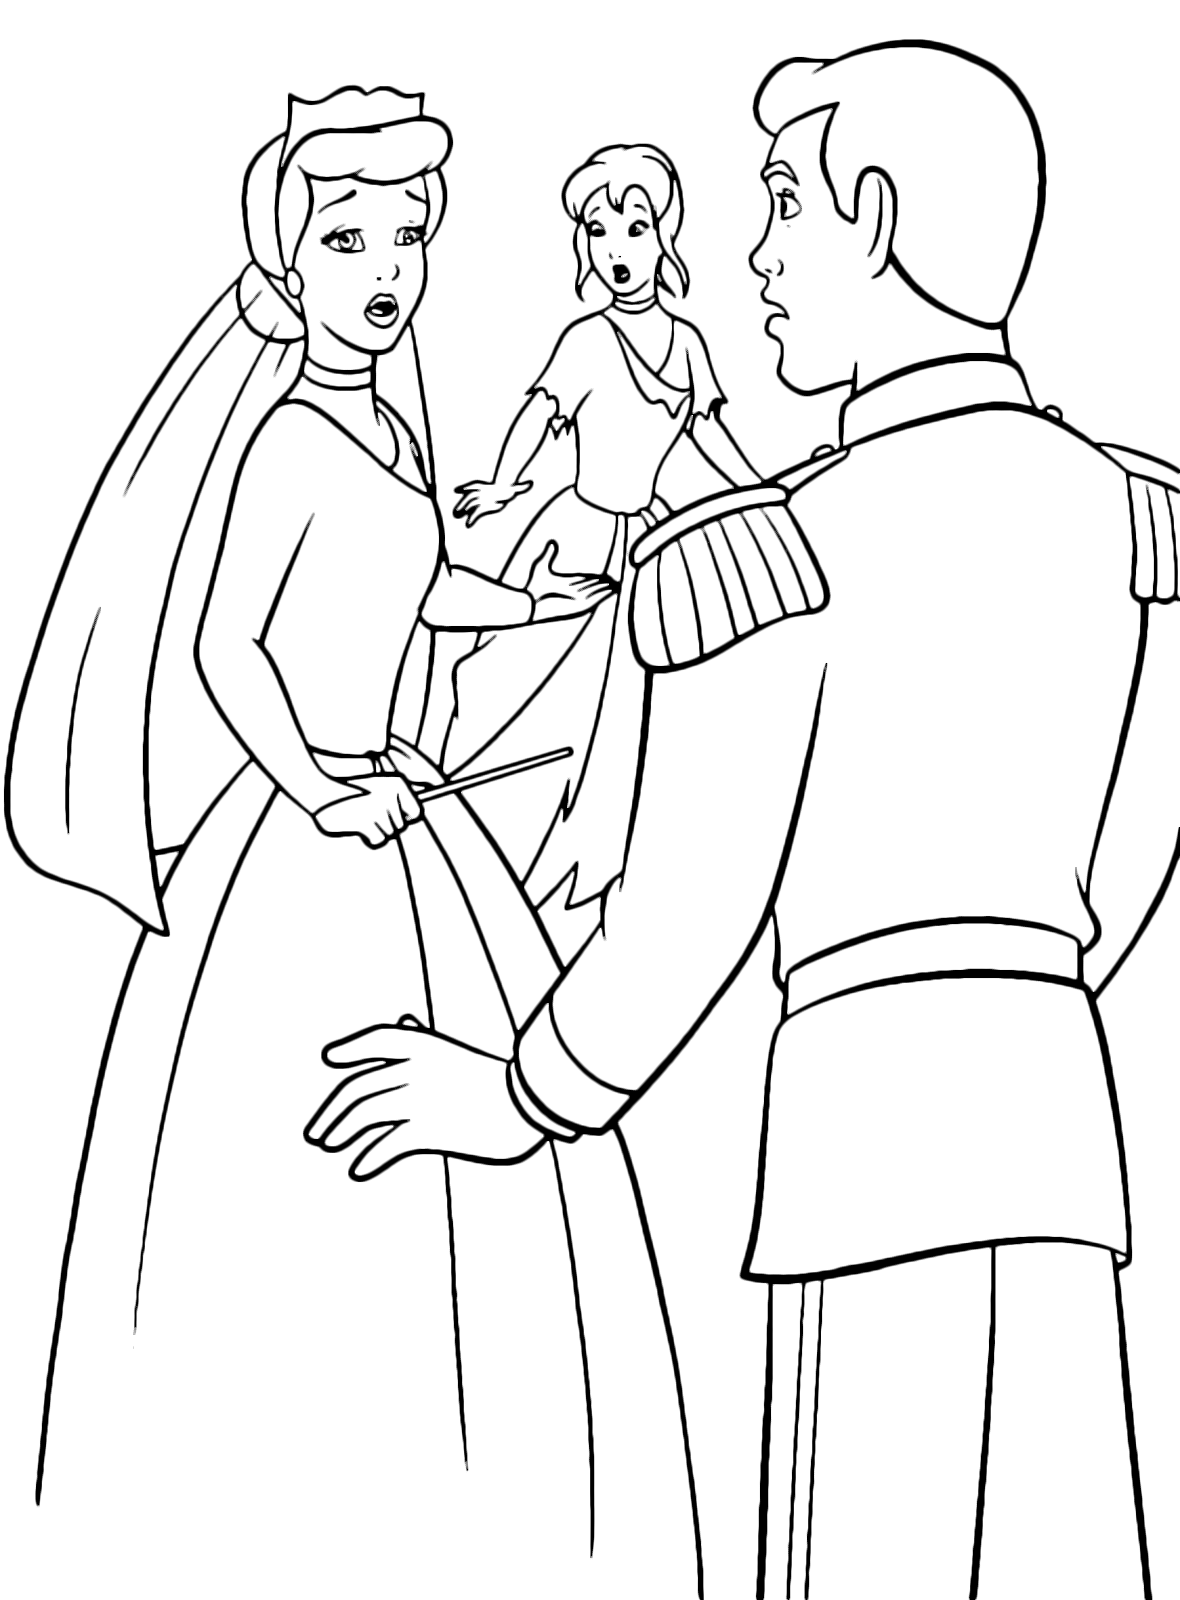 Cenerentola - Il Principe incontra Anastasia trasformata in Cenerentola